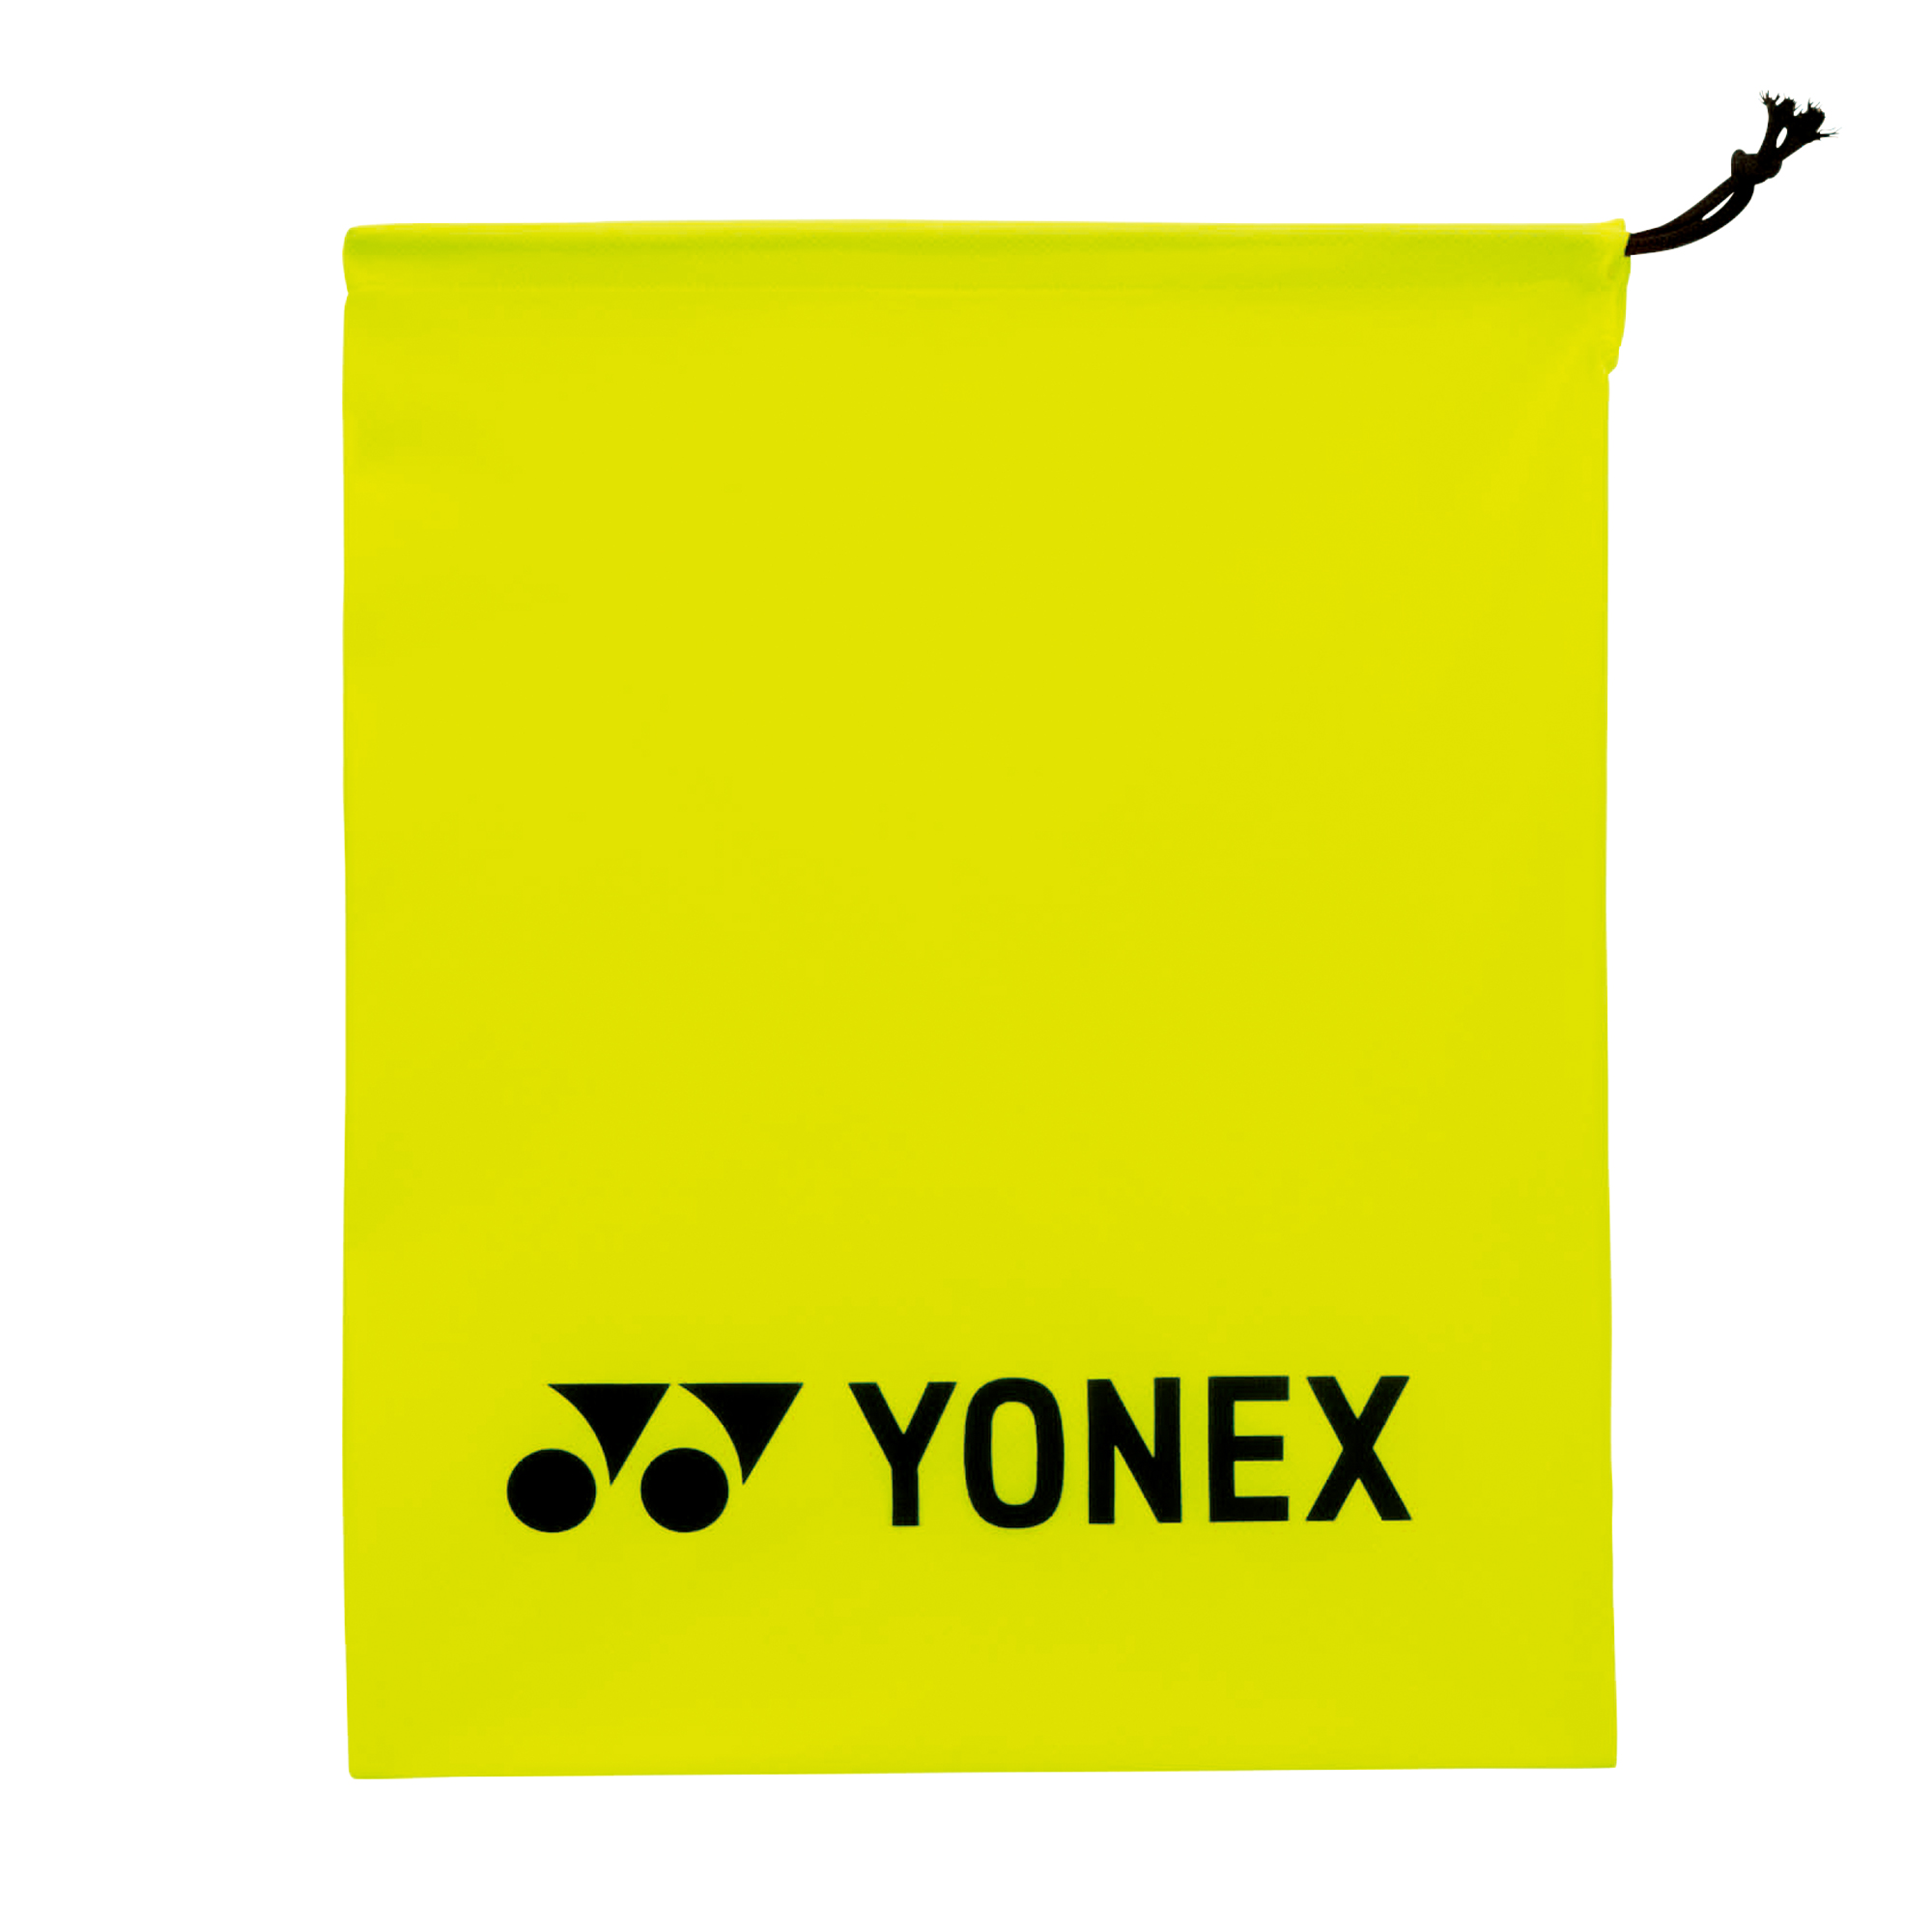 YONEX FOOTBALL WEAR ヨネックスフットボールウェア